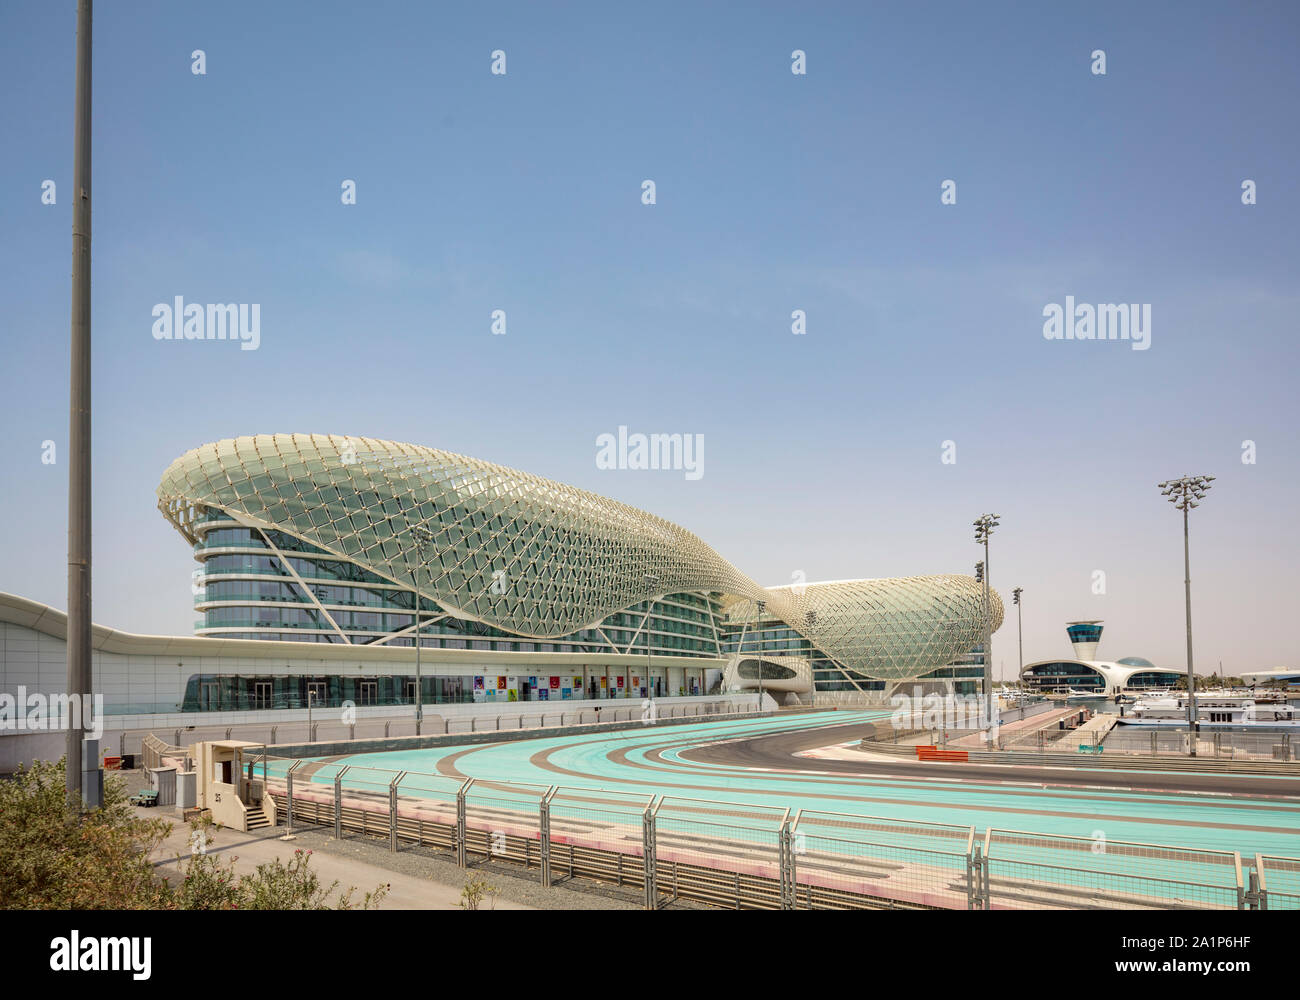 The Yas Marina Circuit, venue for the Abu Dhabi Grand Prix, and the Yas Hotel. United Arab Emirates. Stock Photo